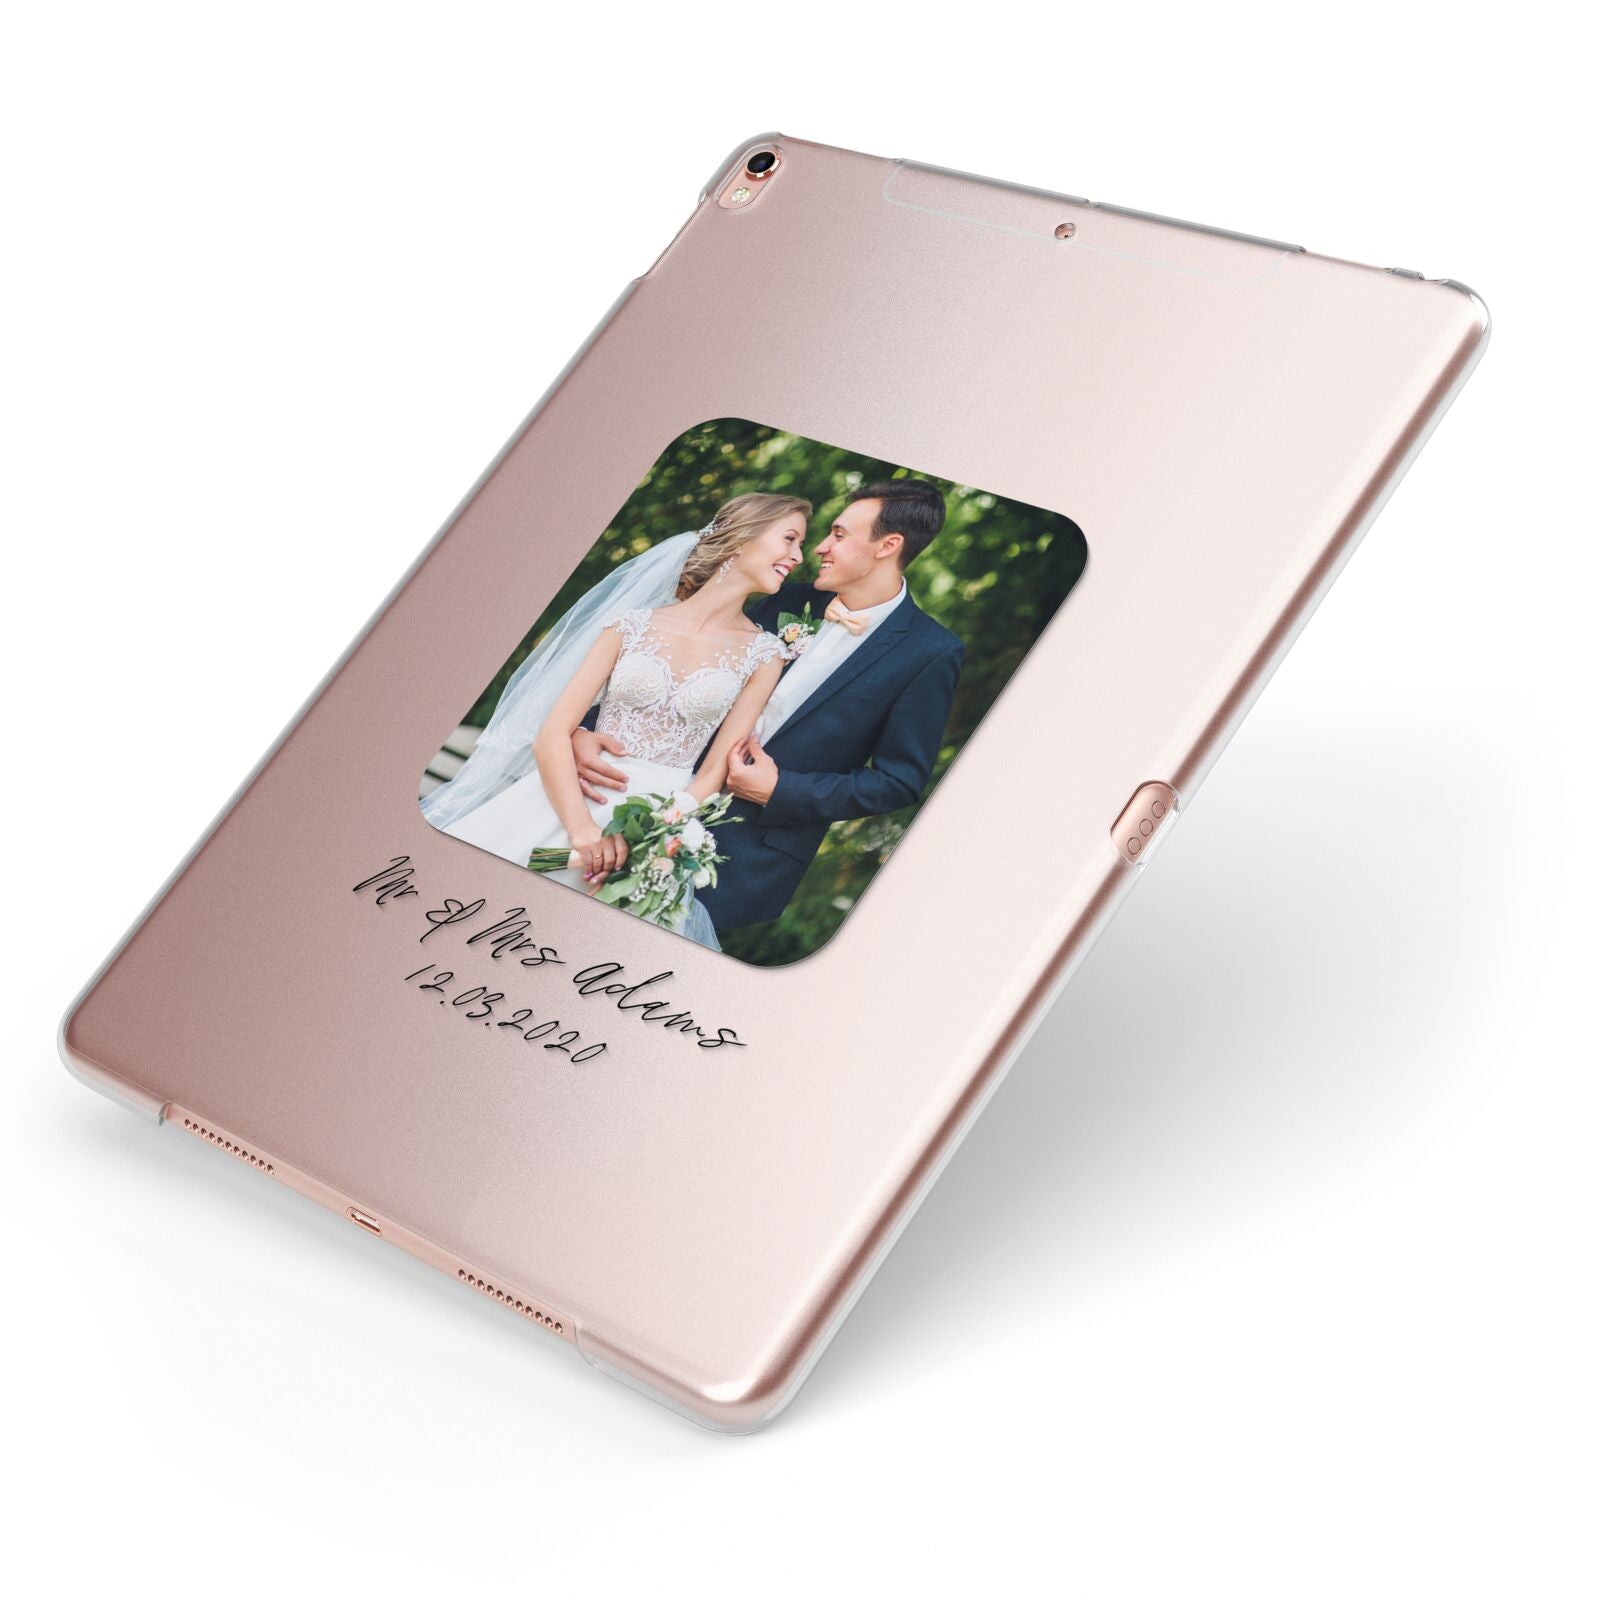 Wedding Photo Upload Keepsake with Text Apple iPad Case on Rose Gold iPad Side View